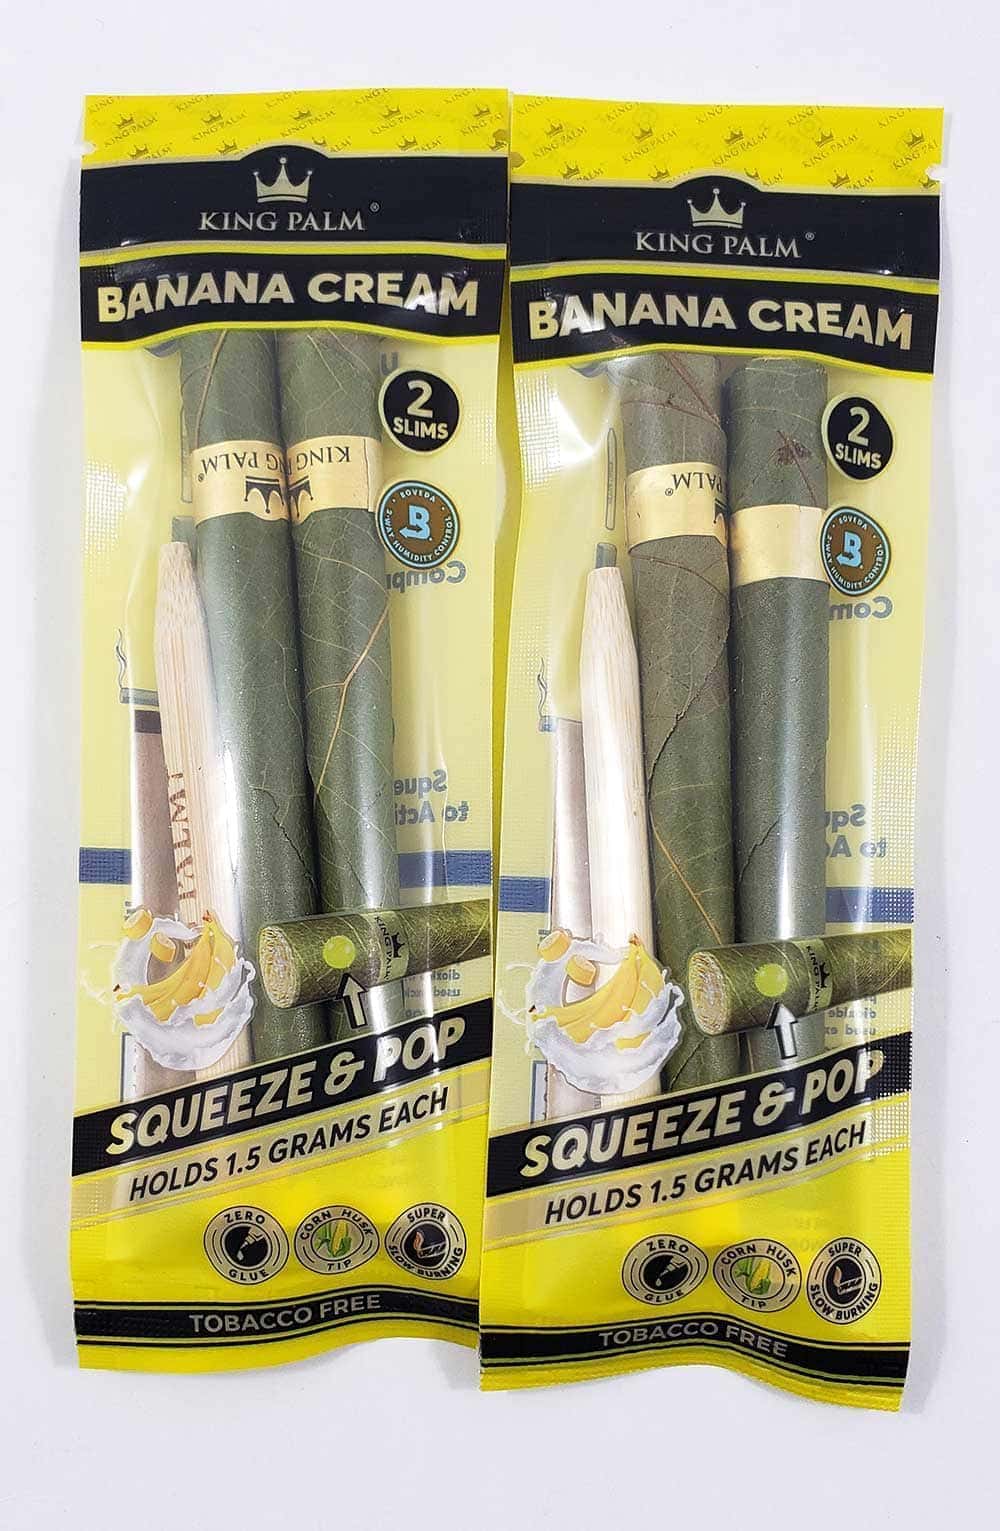 King Palm Banana Cream